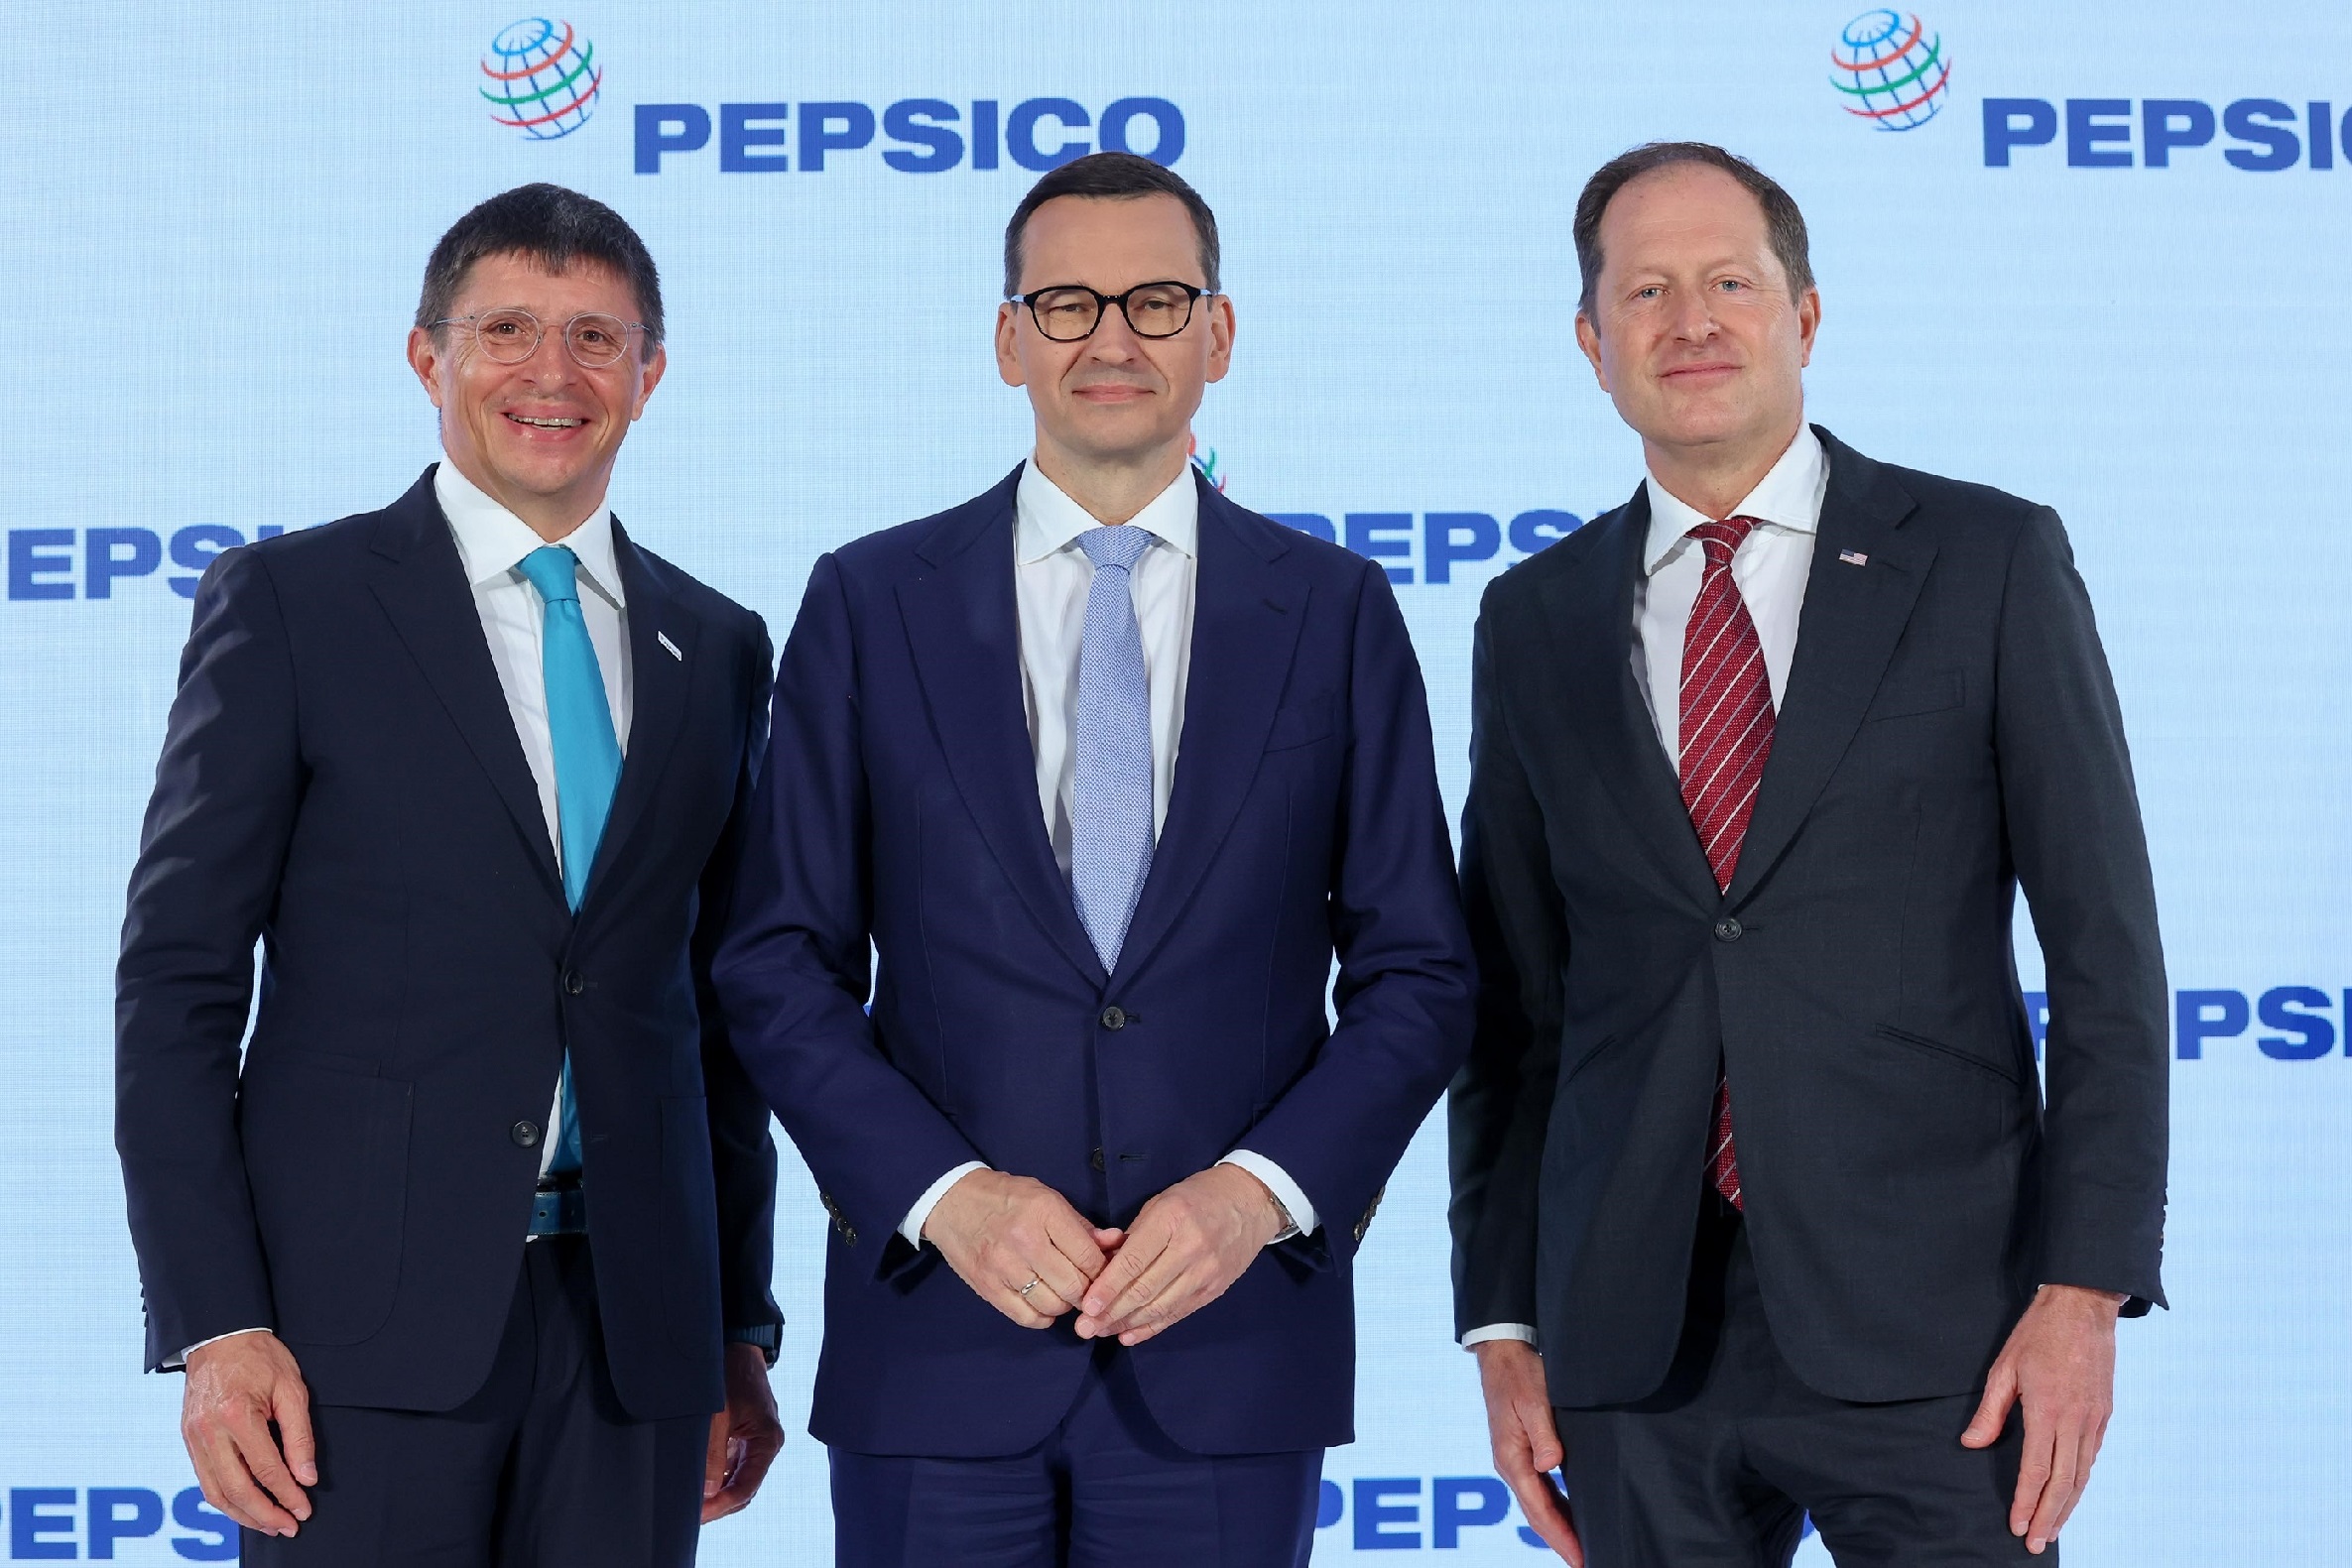 Silviu Popovici, CEO PepsiCo na Europę, PMM oraz Ambasador USA_www